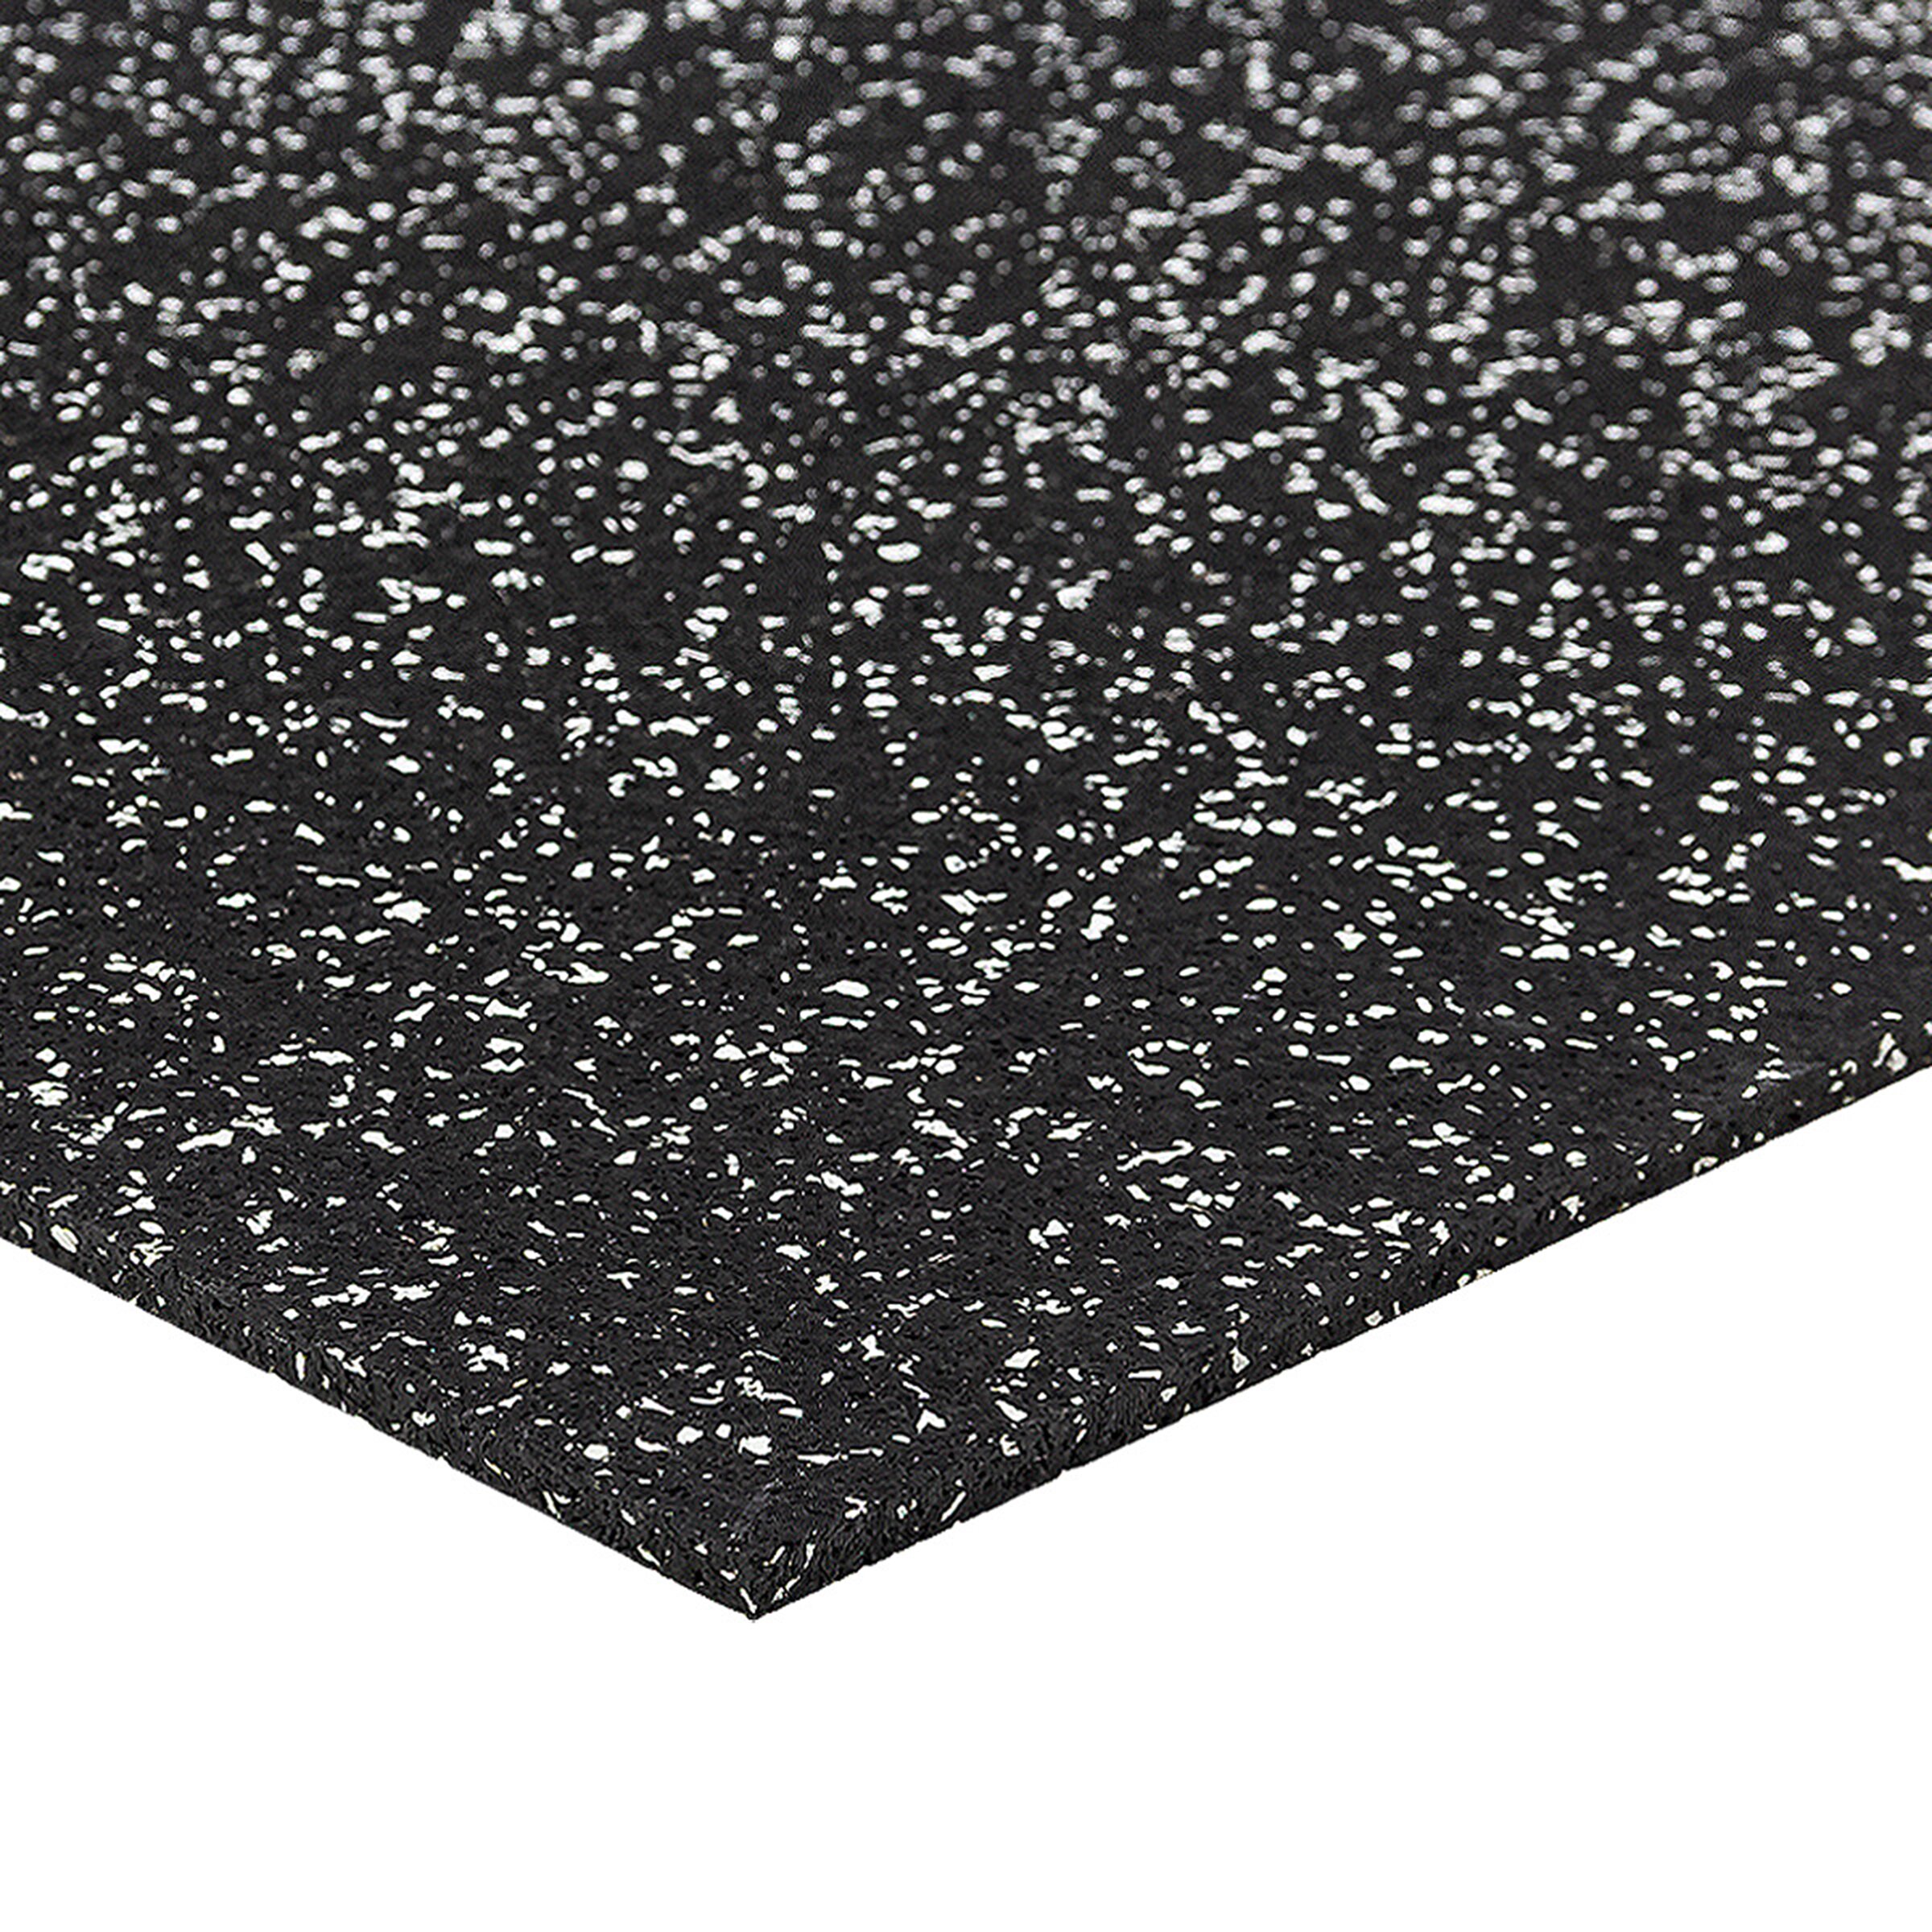 Černo-bílá podlahová guma (puzzle - střed) FLOMA FitFlo SF1050 - délka 100 cm, šířka 100 cm, výška 0,8 cm